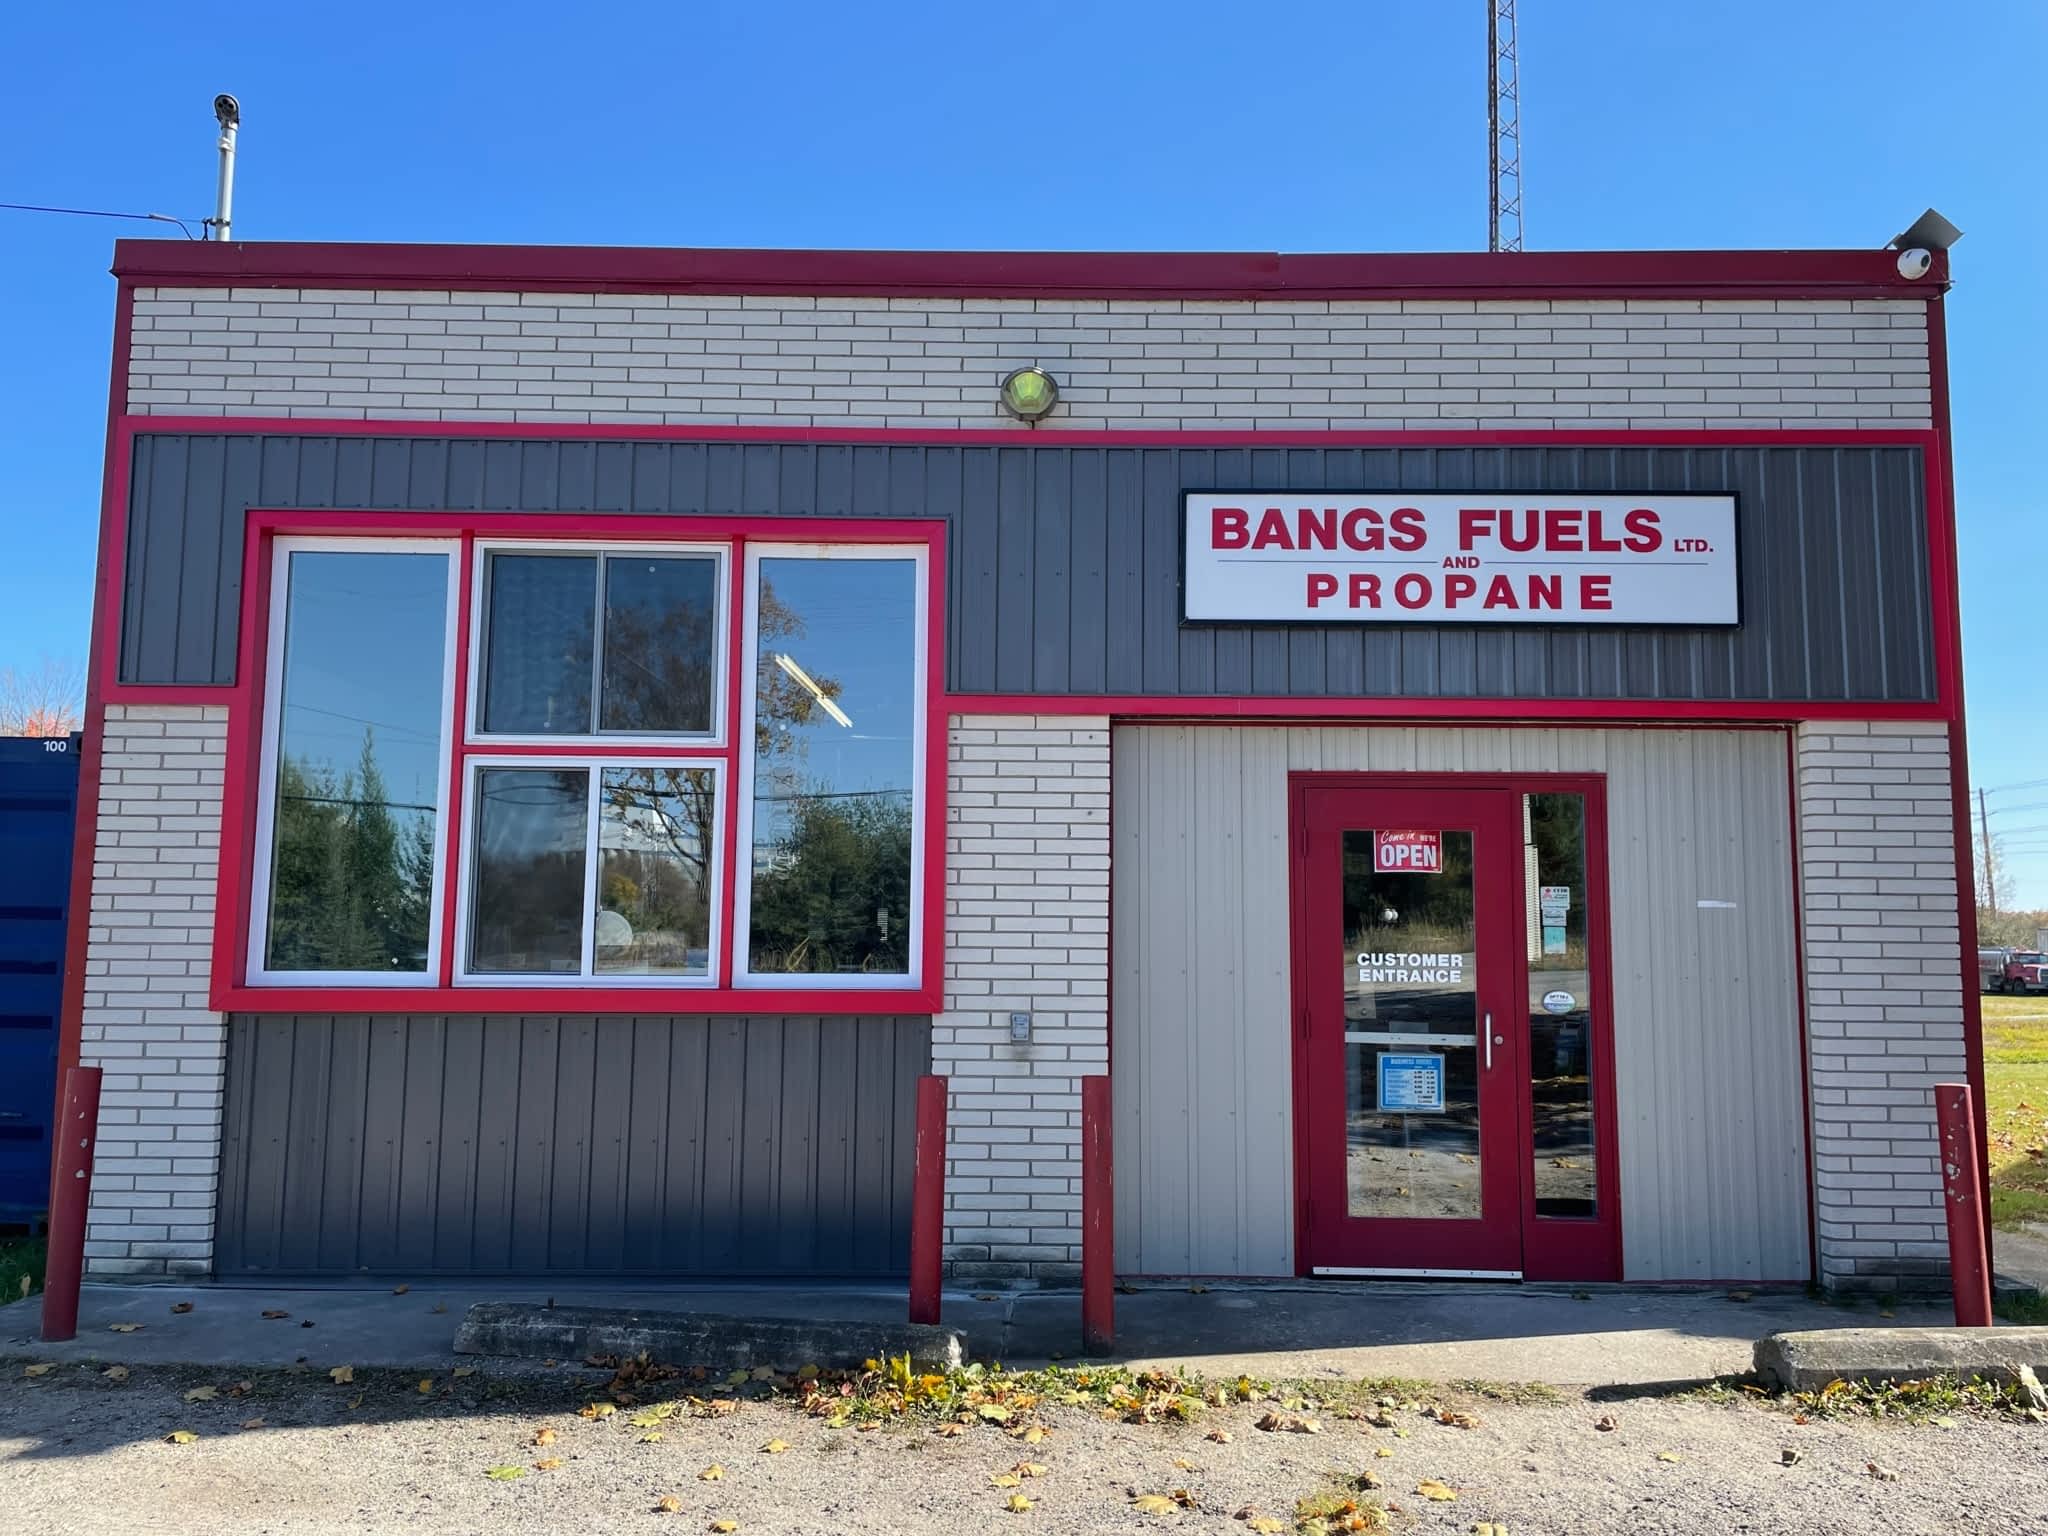 photo David R. Bangs Fuels Ltd.